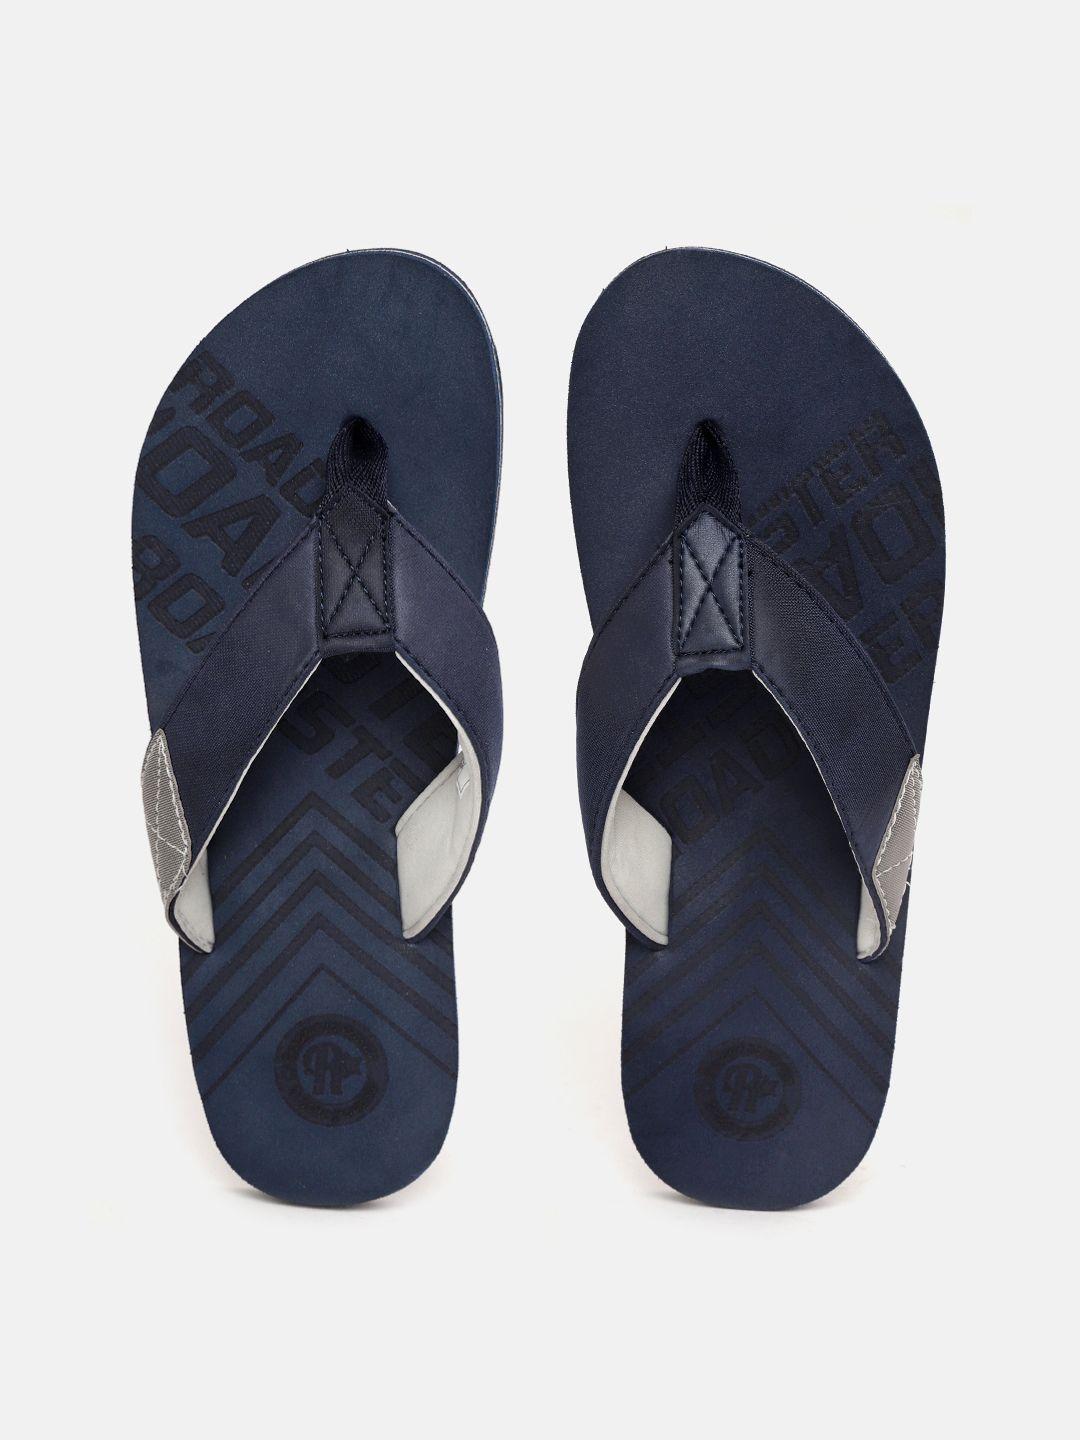 the roadster lifestyle co men navy blue & black printed thong flip-flops